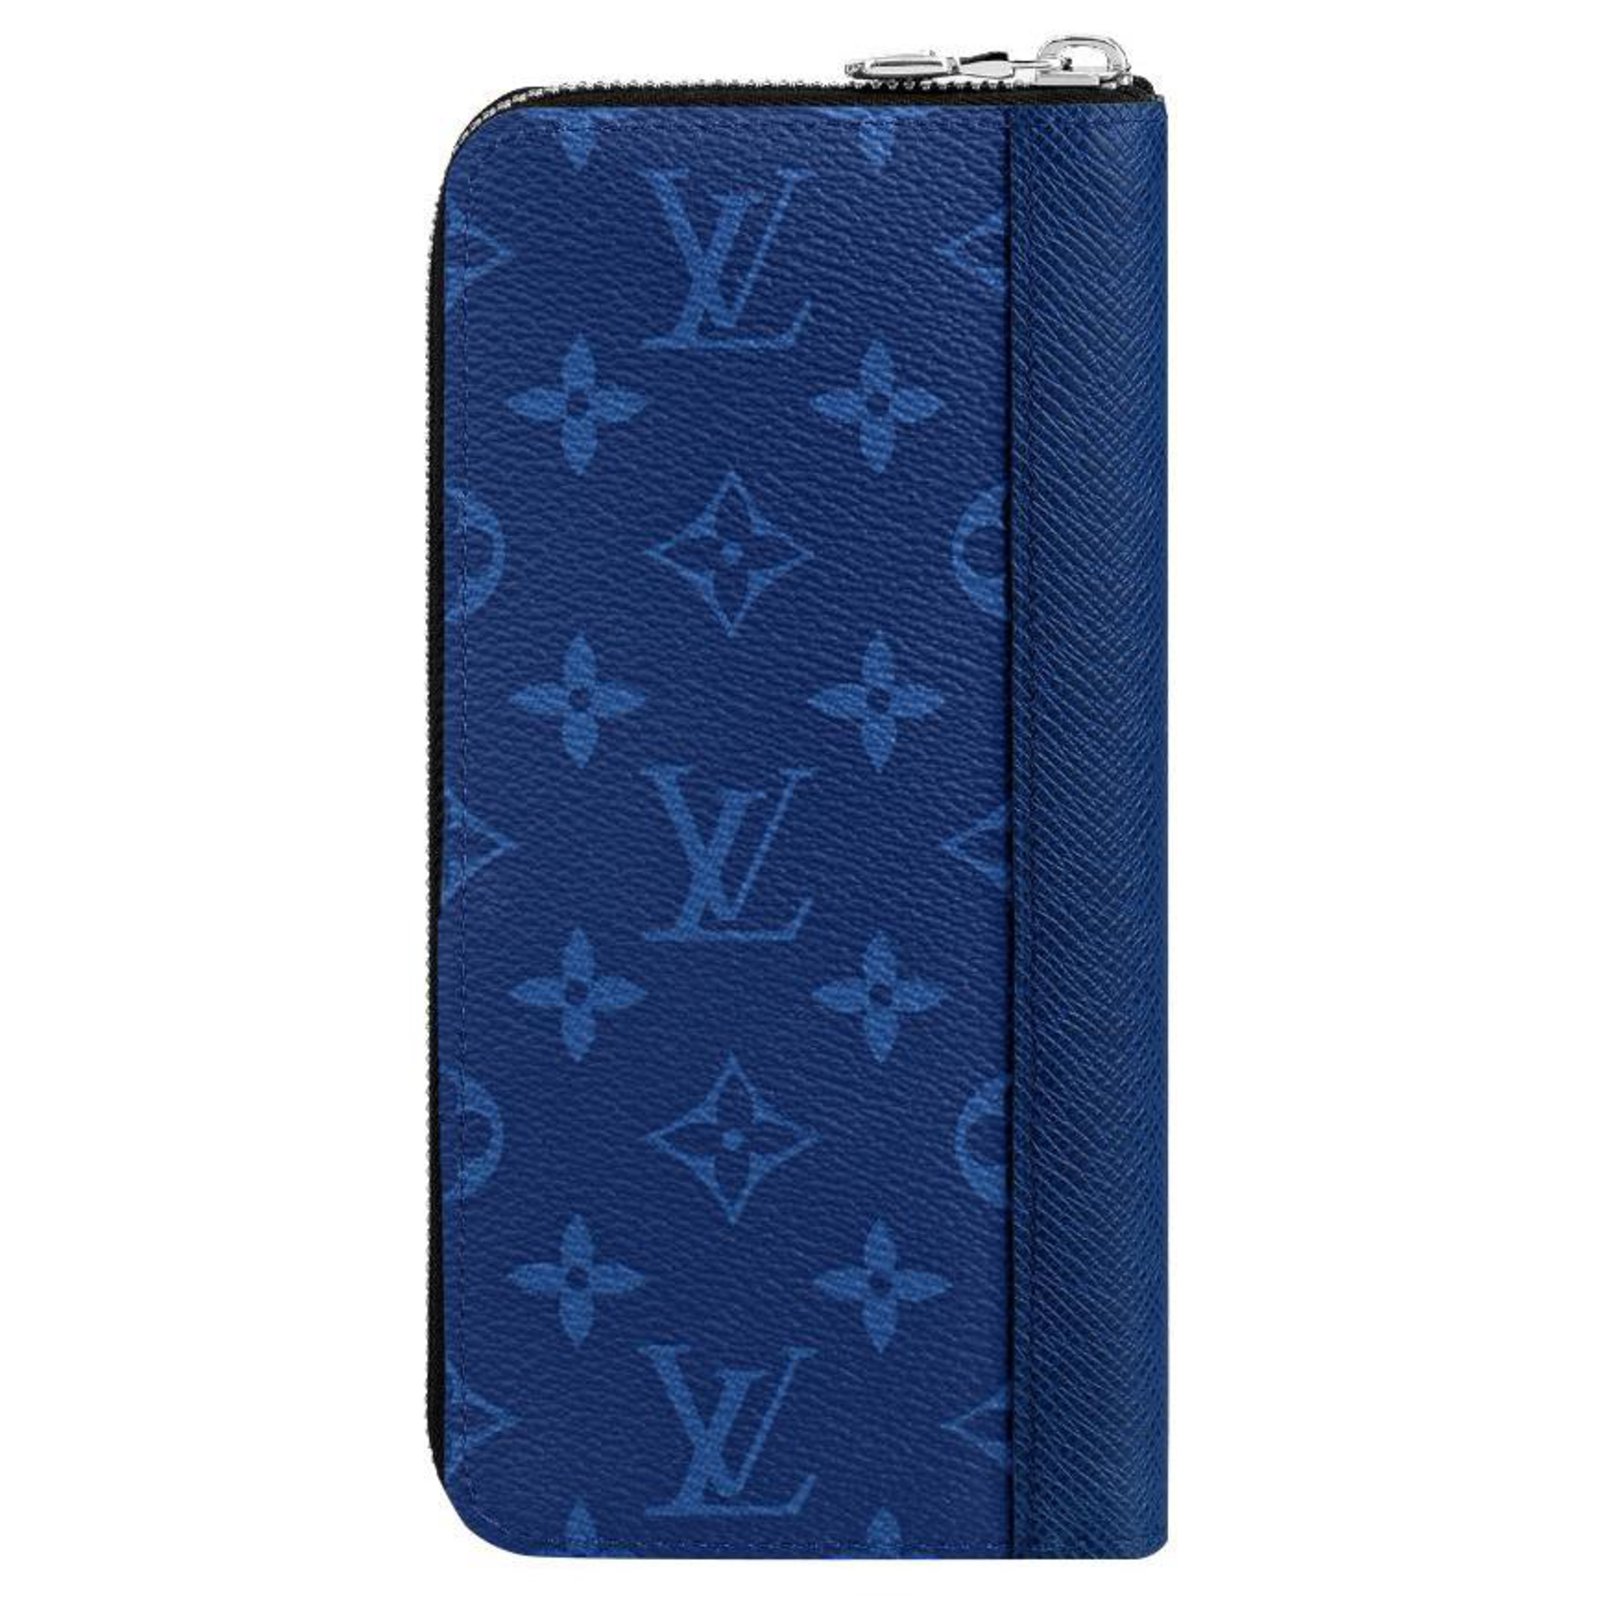 Louis Vuitton - Authenticated Zippy Wallet - Leather Blue Plain for Women, Very Good Condition